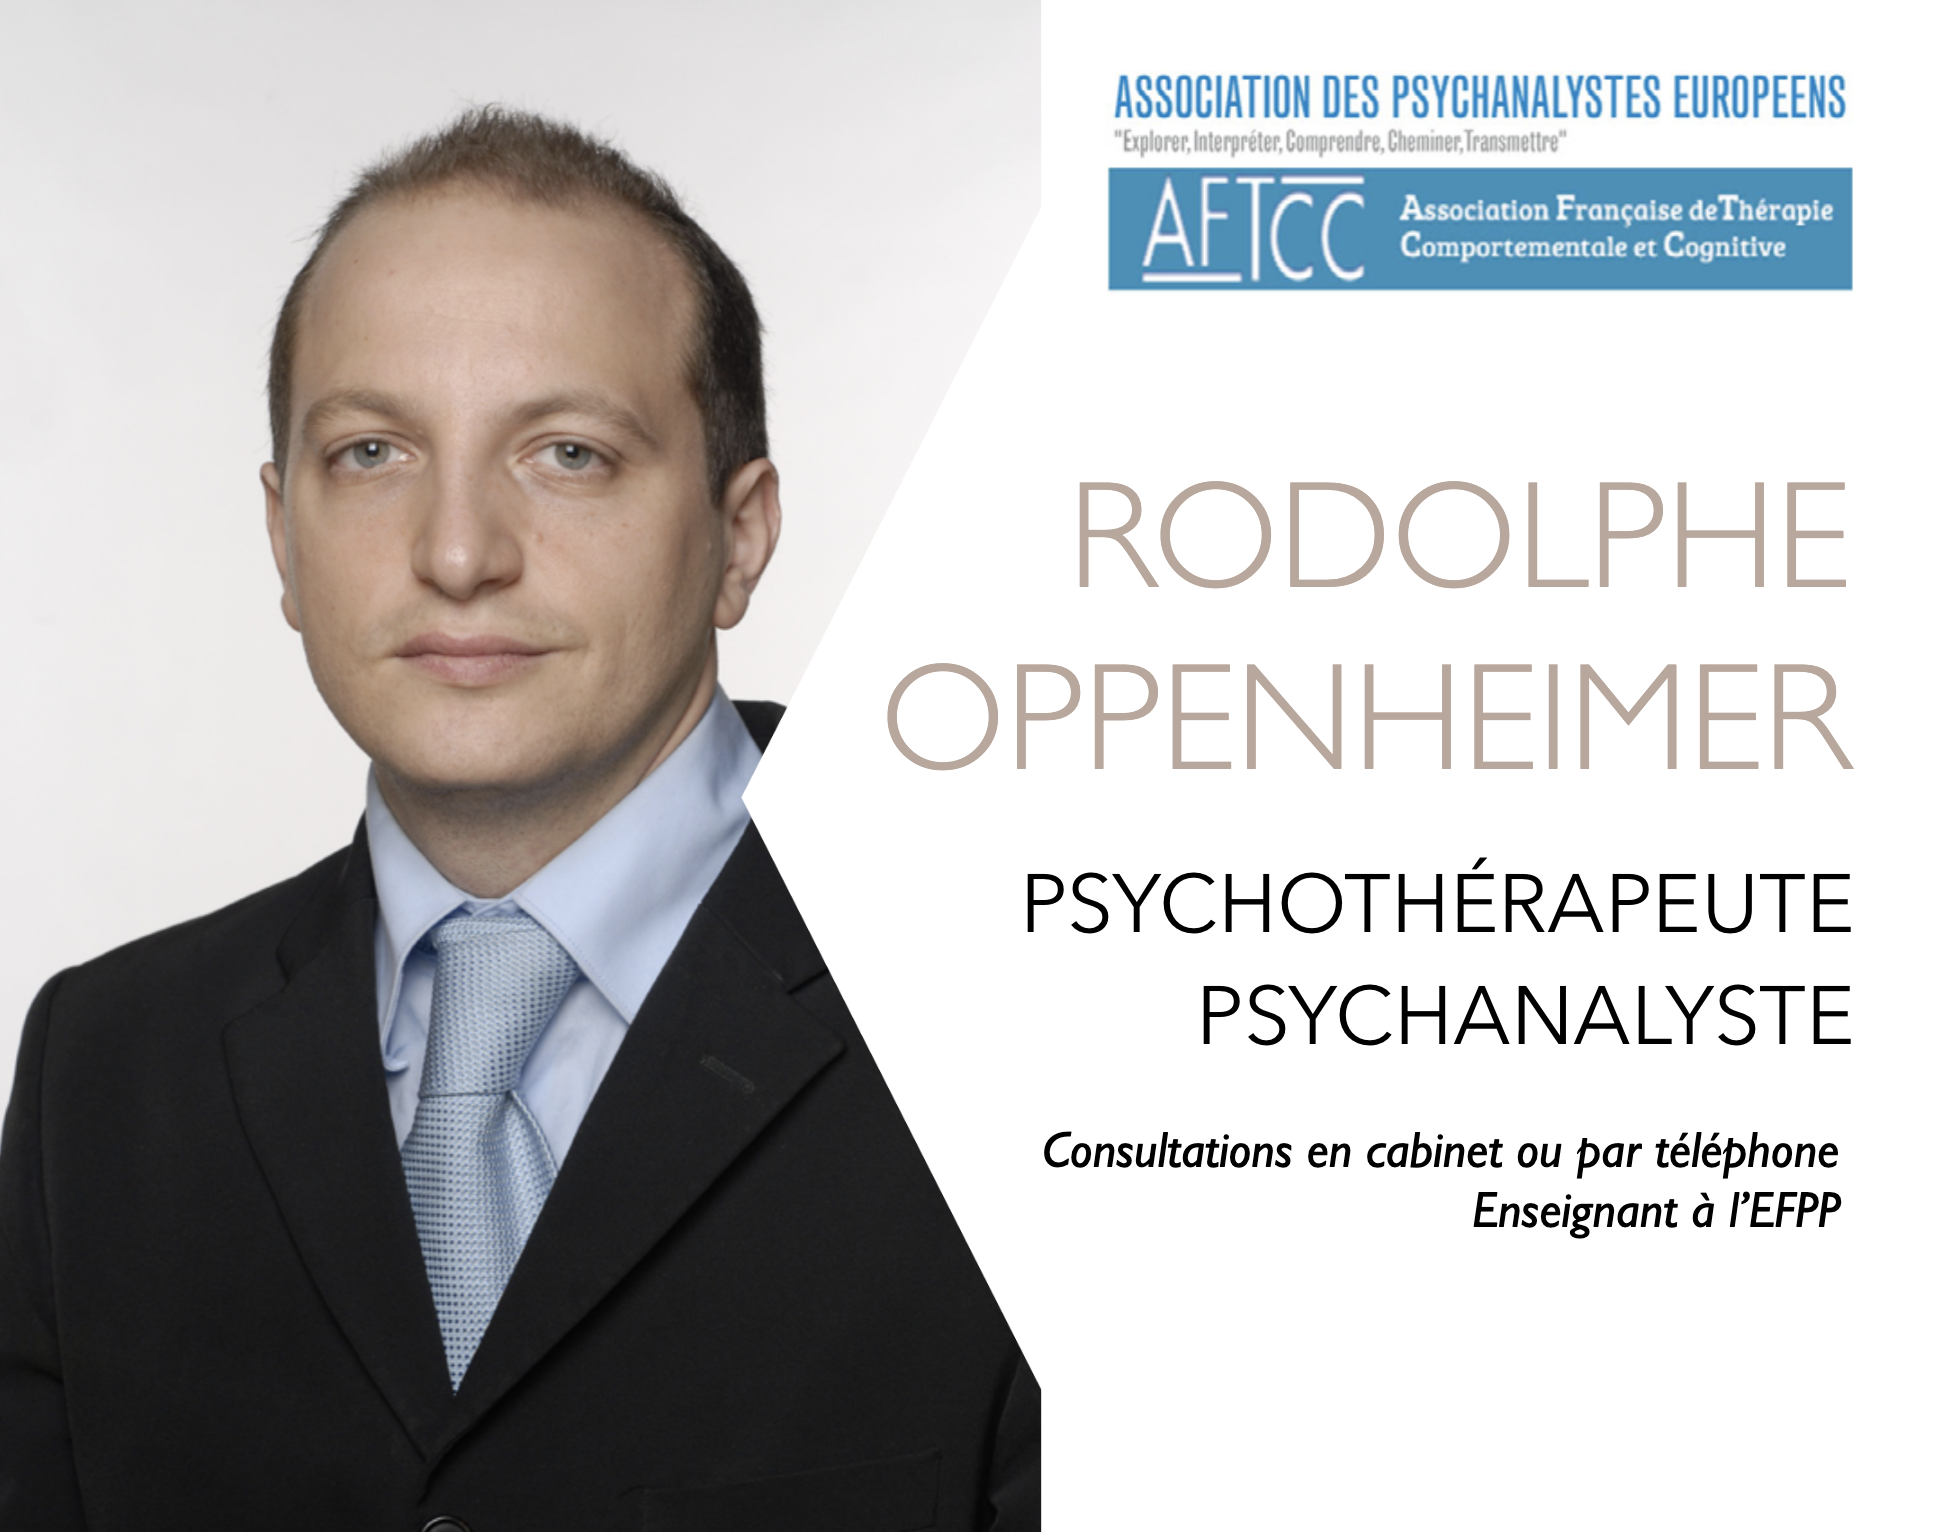 rodolphe oppenheimer psychotherapeute psychanalyste à paris